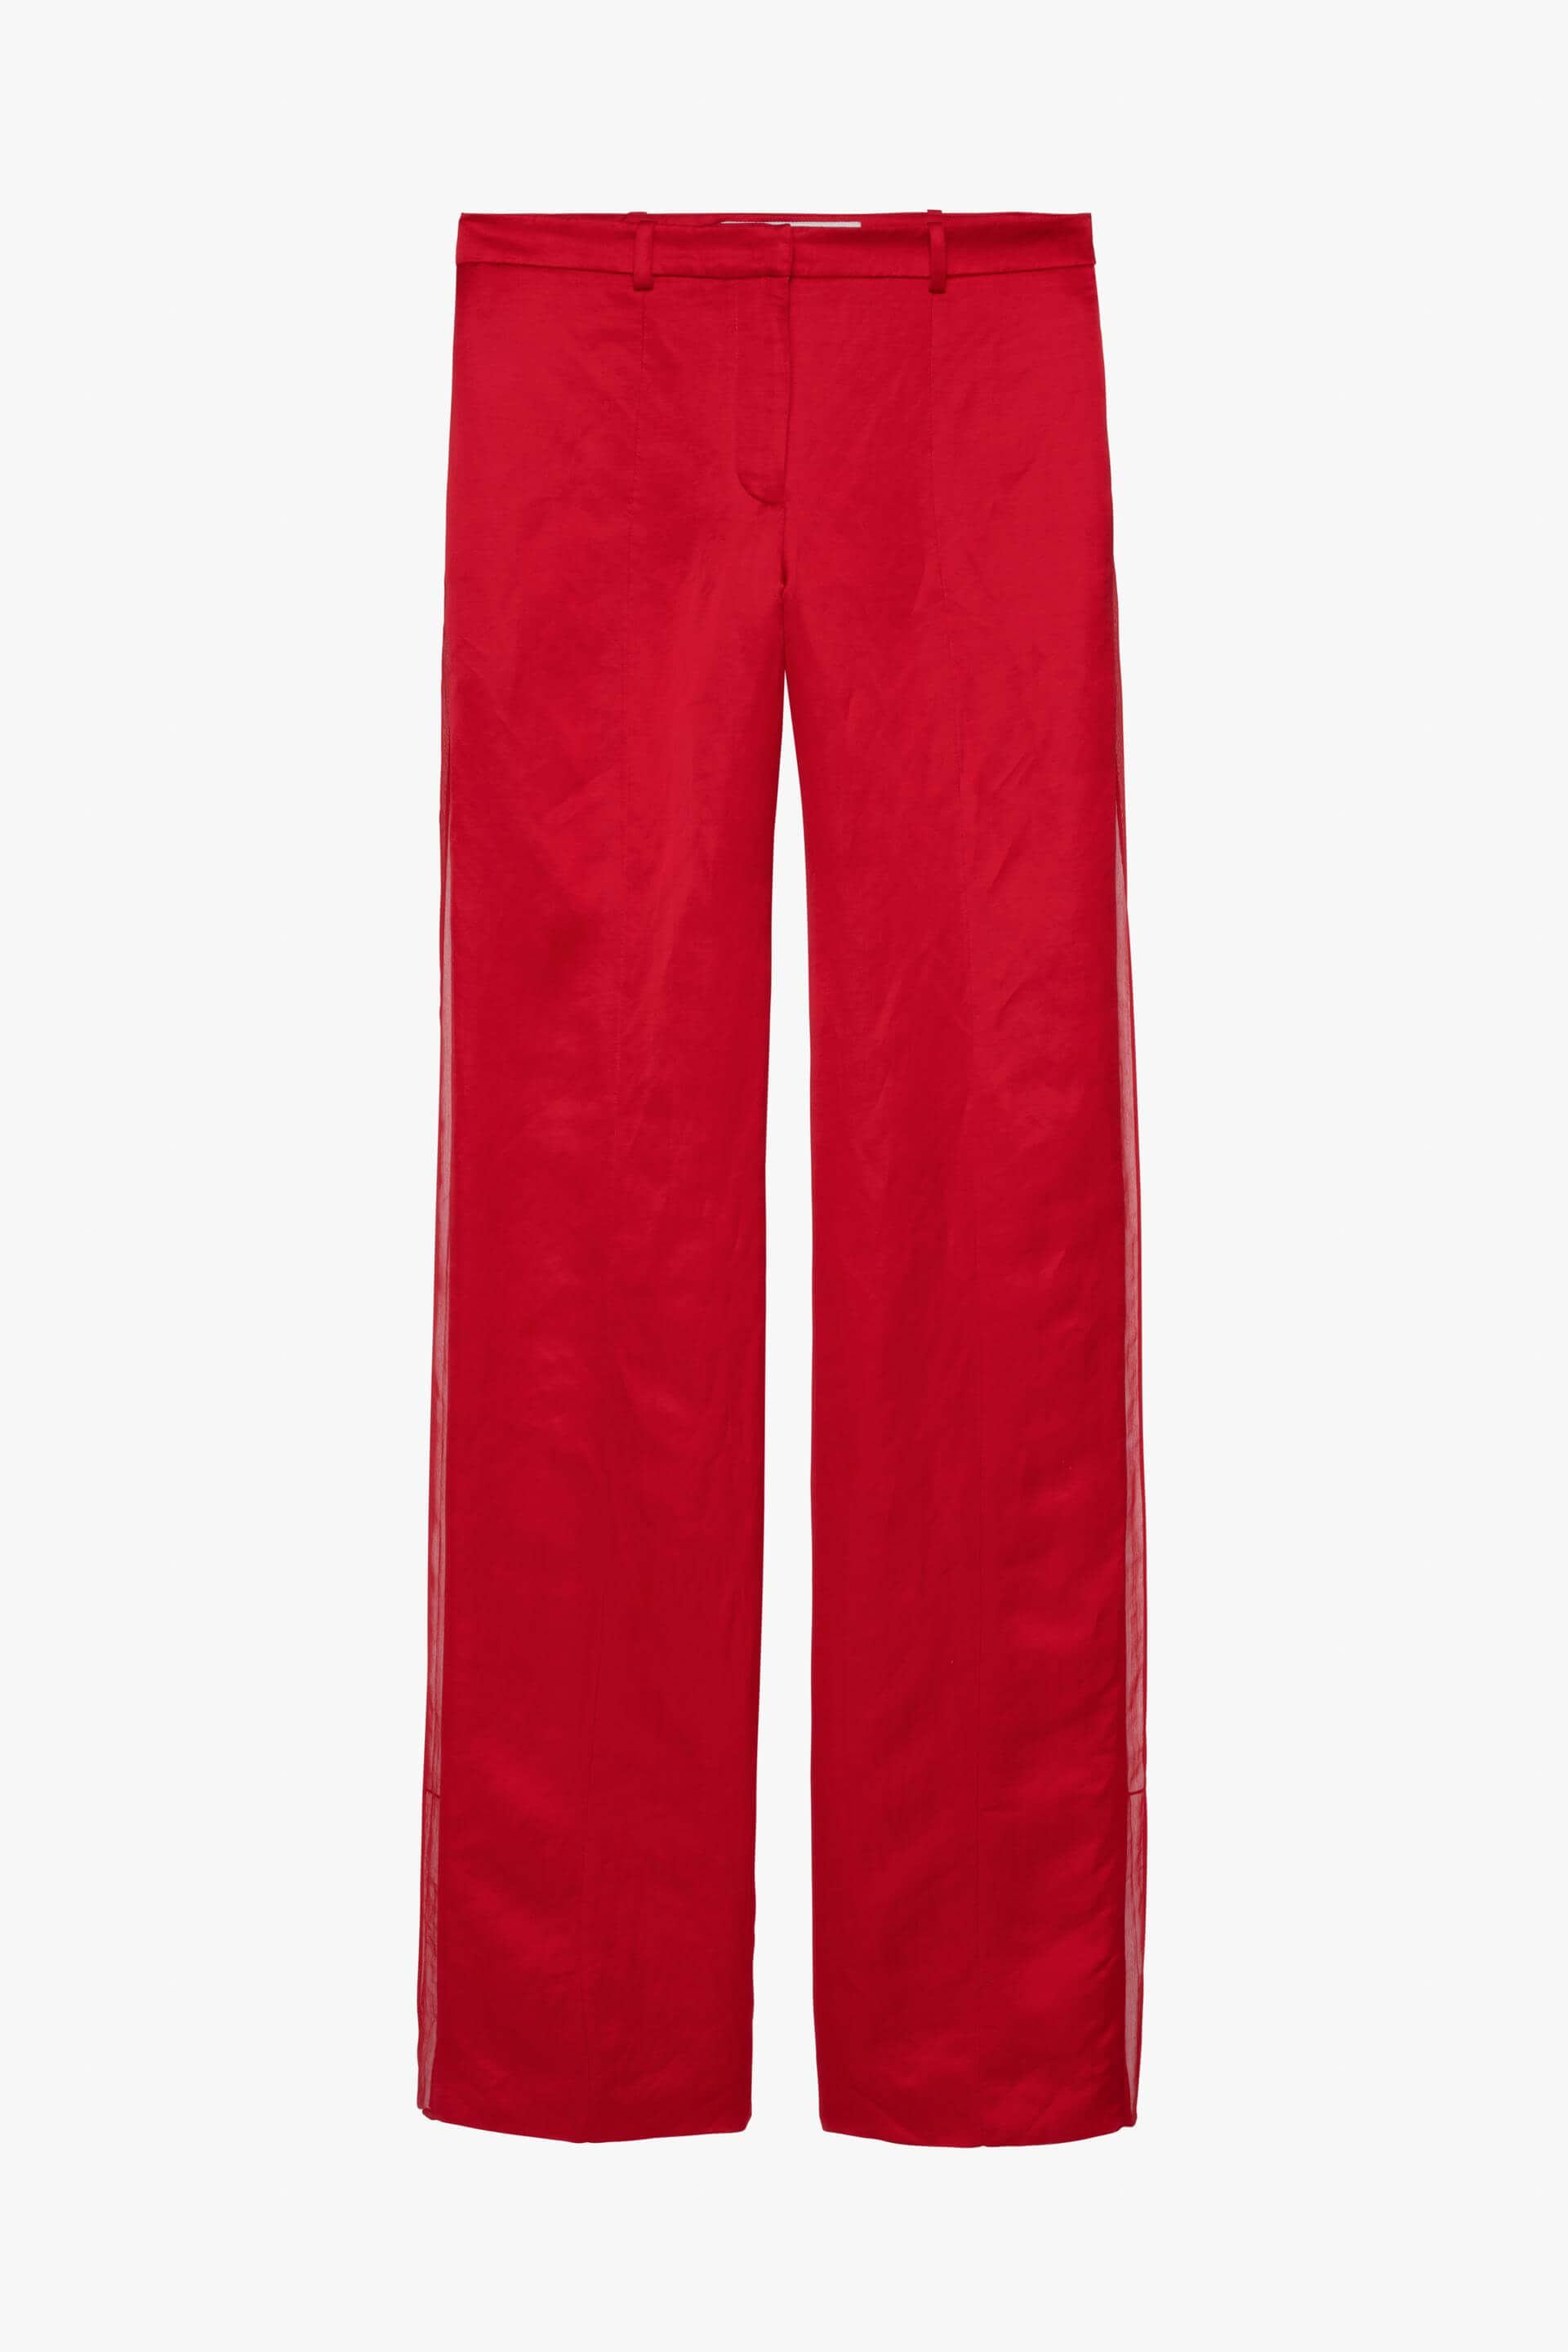 Брюки Zara Organza Satin - Limited Edition, красный брюки zara textured limited edition песочный